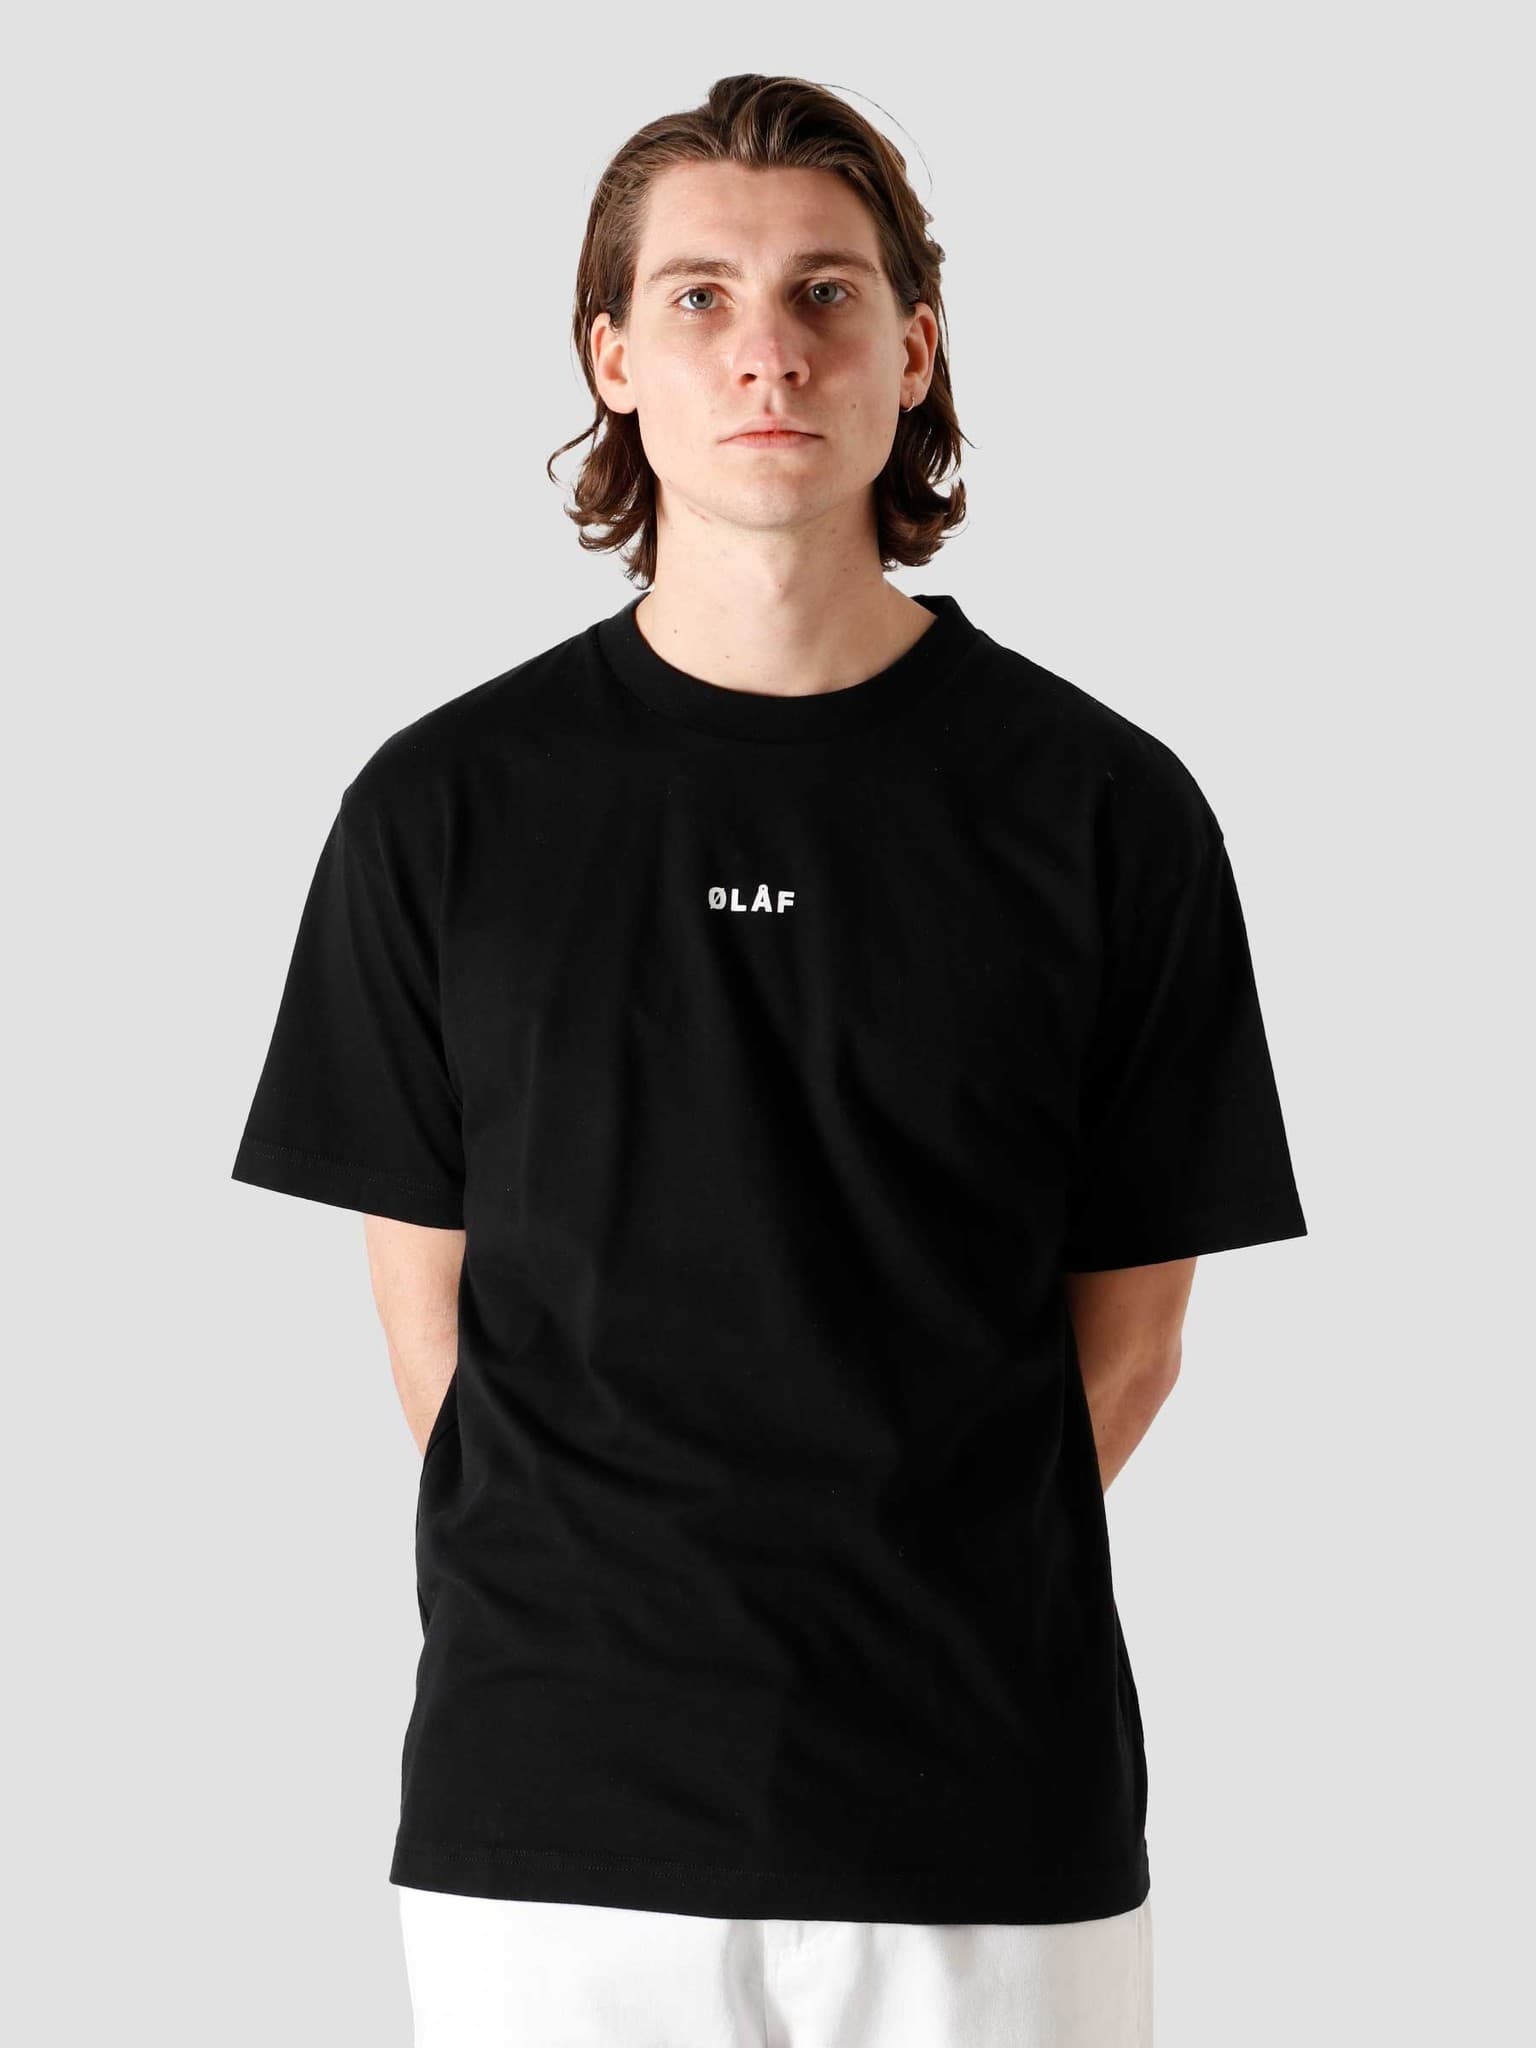 Olaf Block T-Shirt Black NOS_0021